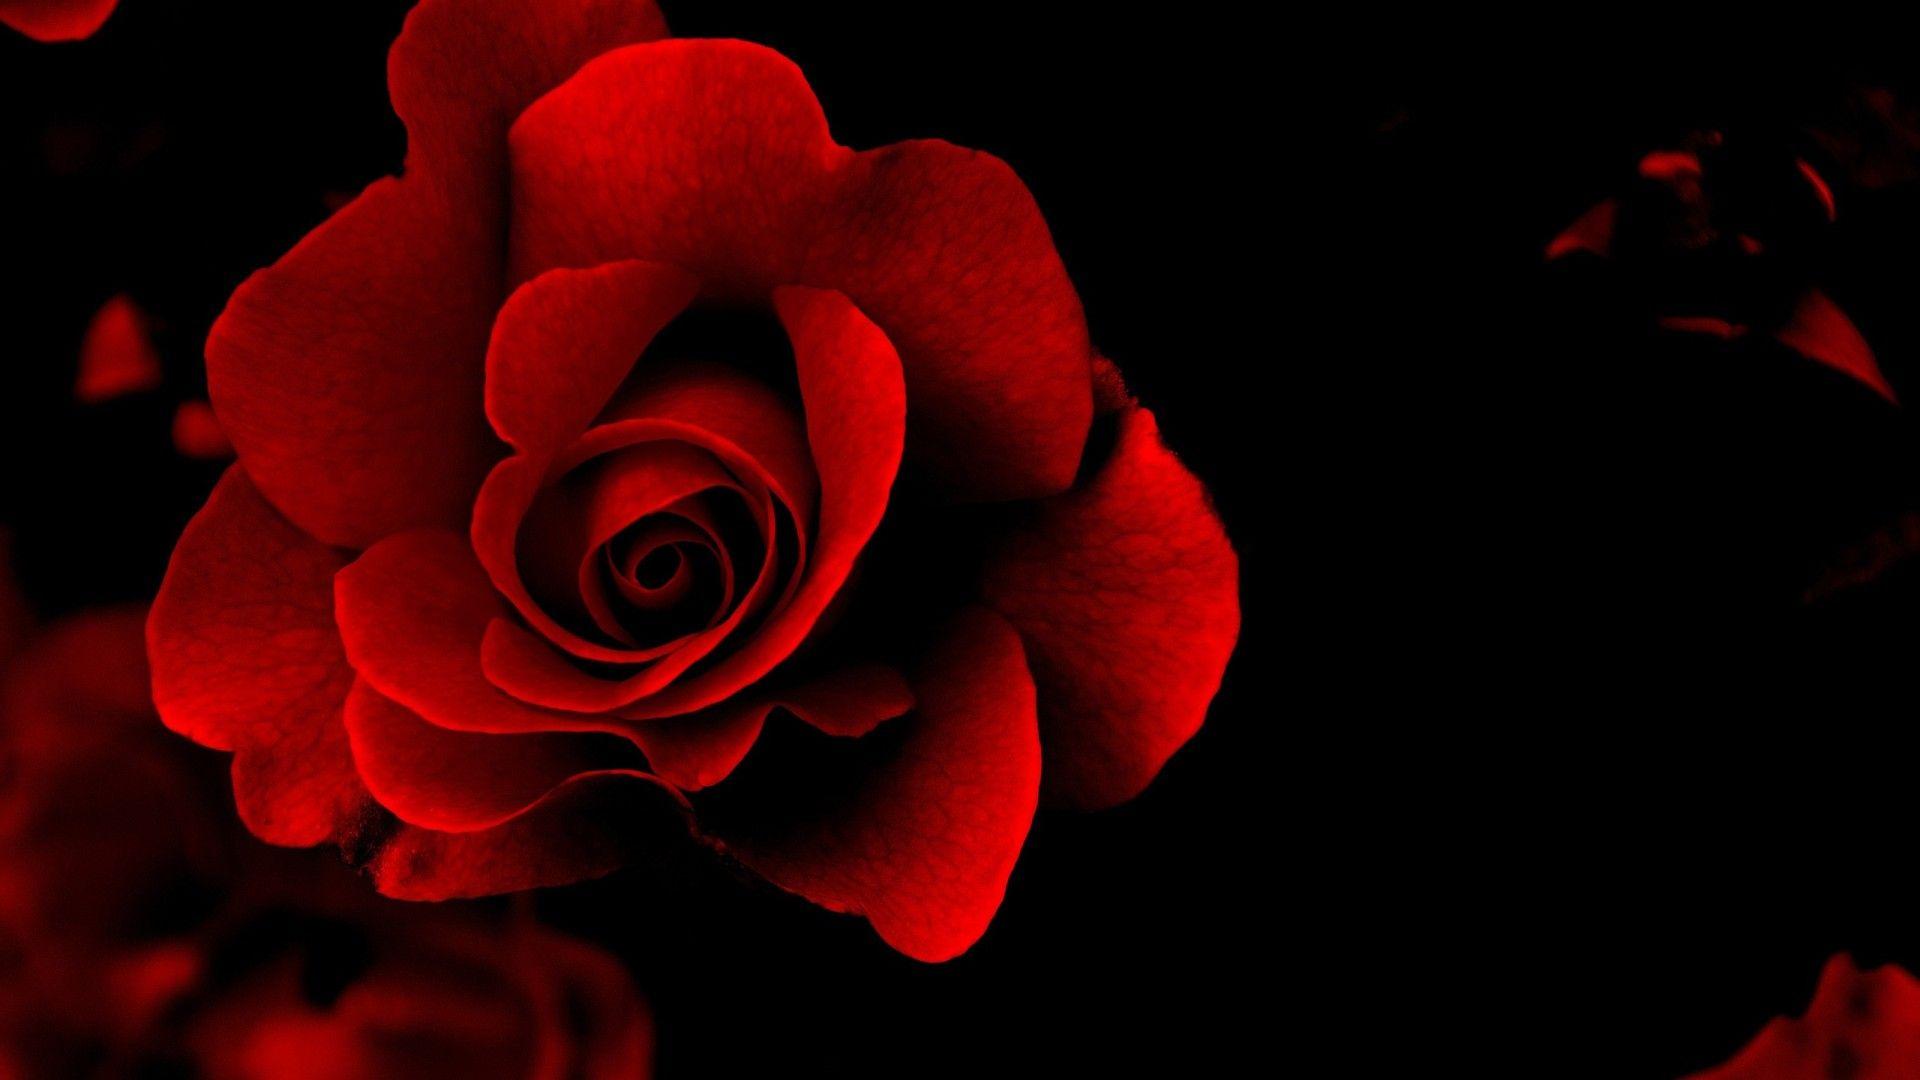 Red Rose Wallpaper Download. (38++ Wallpaper)